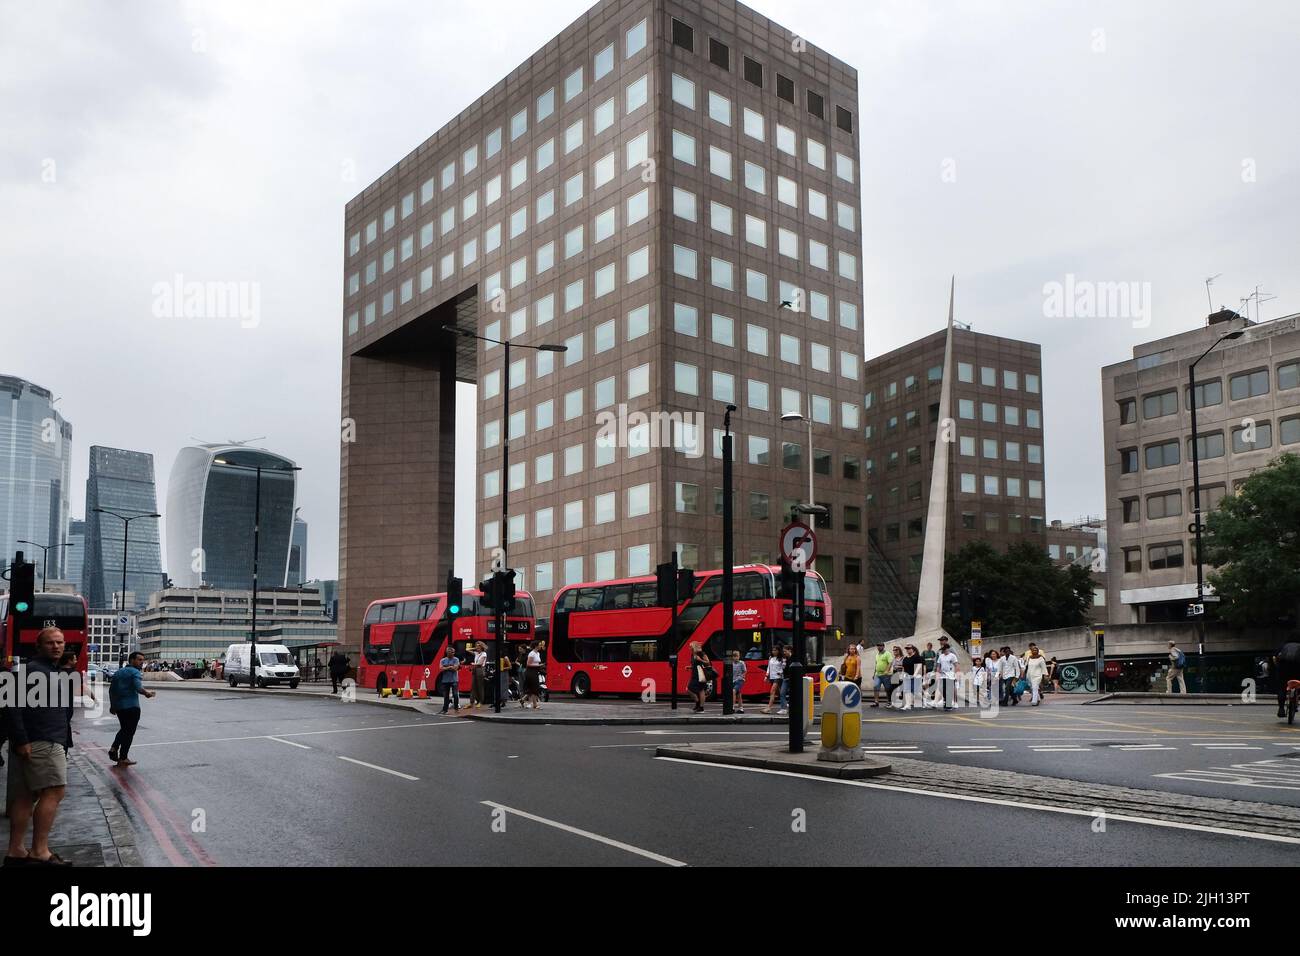 Londres , Angleterre, Royaume-Uni - Voyage, perspectives inhabituelles Banque D'Images